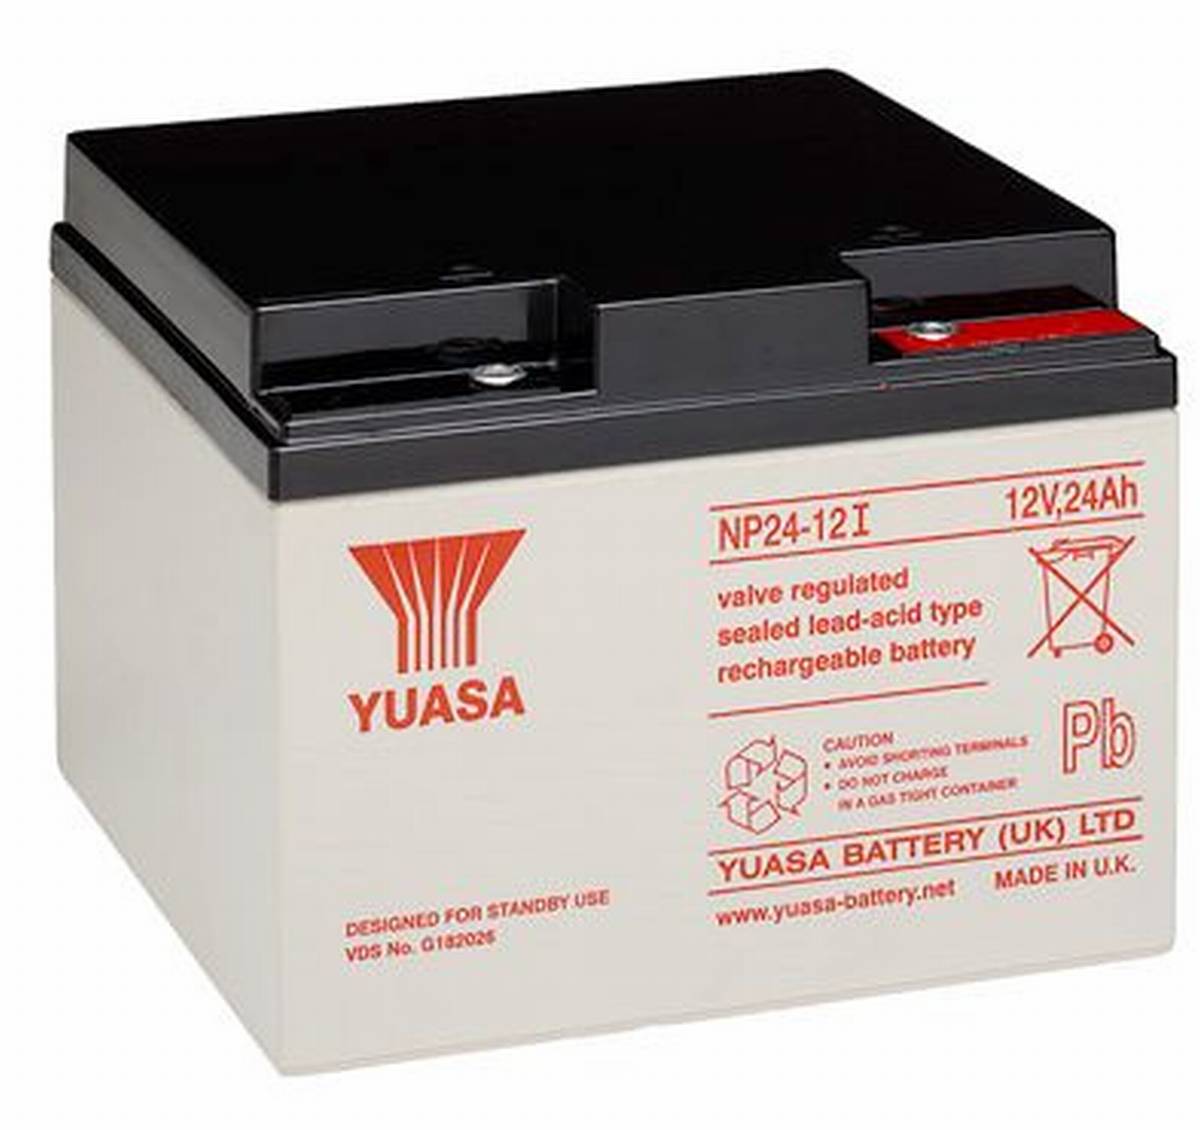 Yuasa NP24-12I 24Ah 12V Lead-Acid Battery / AGM NP 24-12 VdS